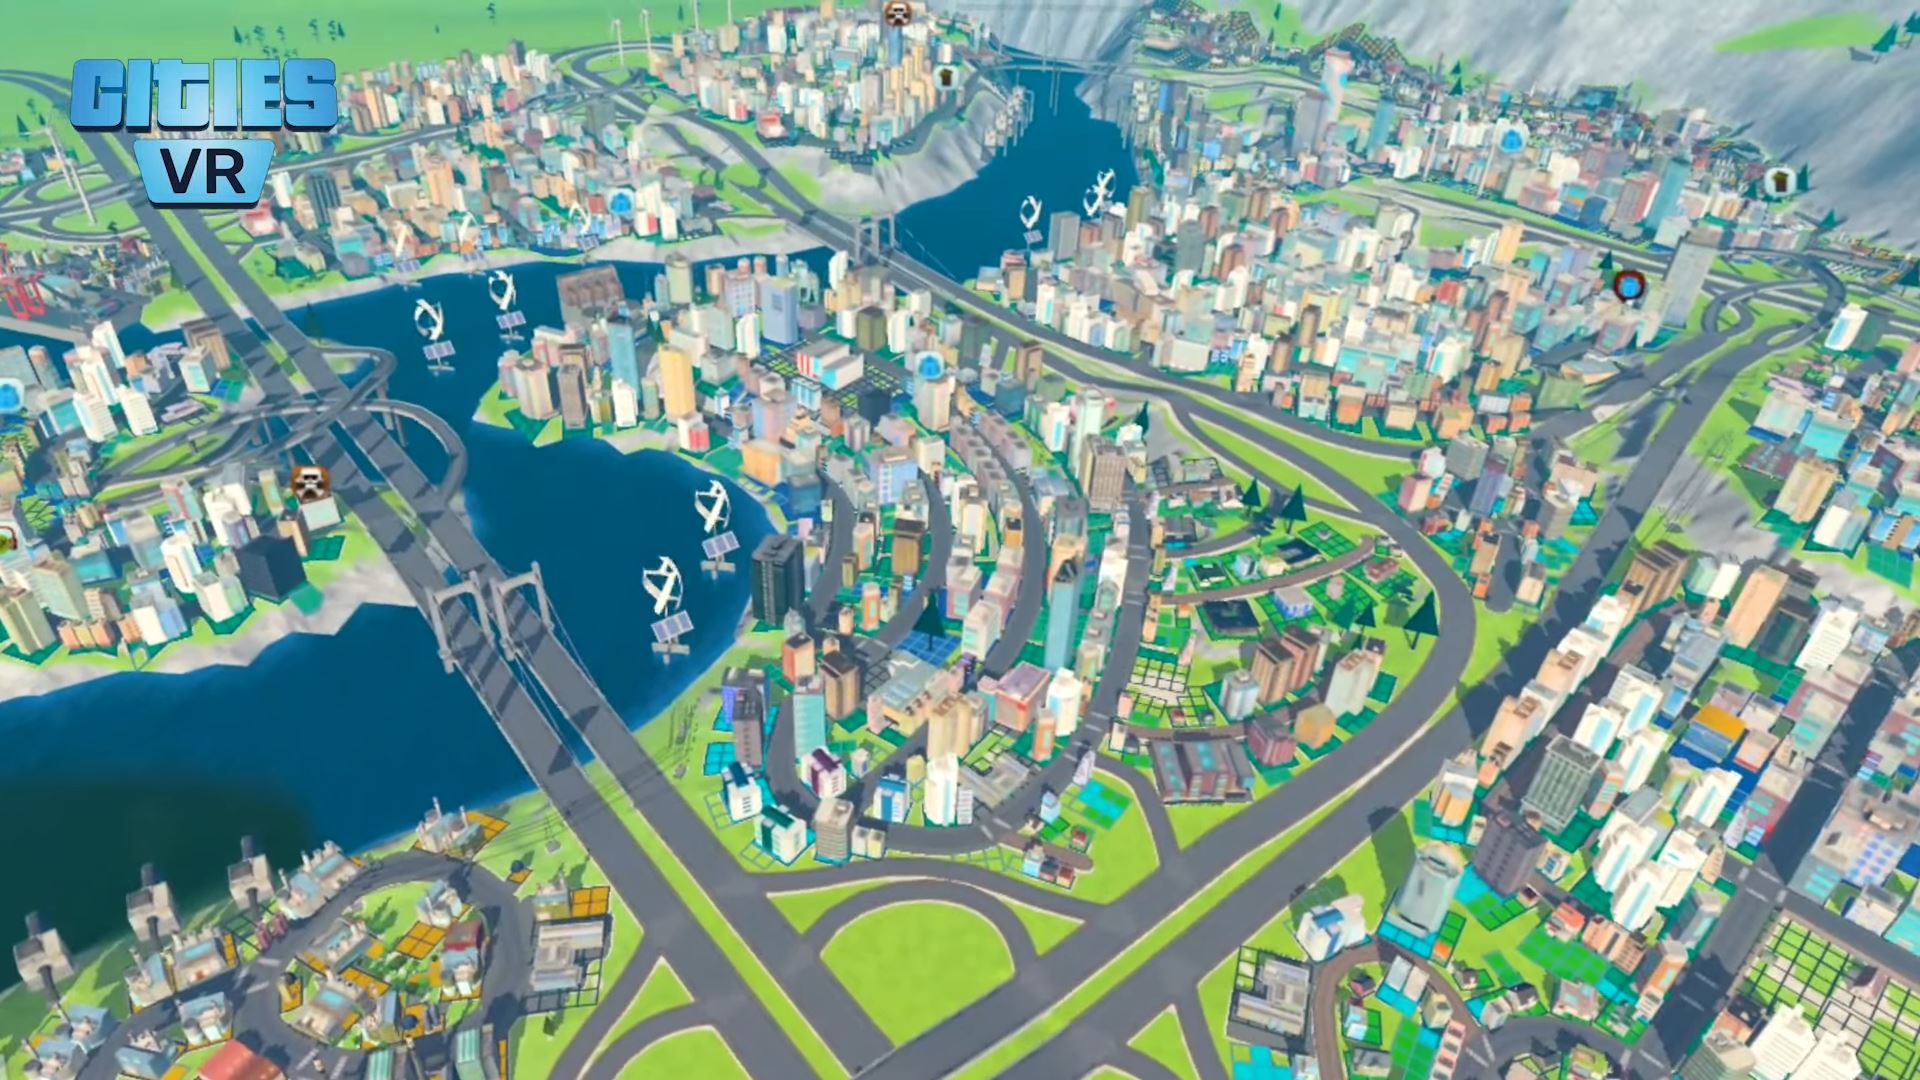 Cities VR